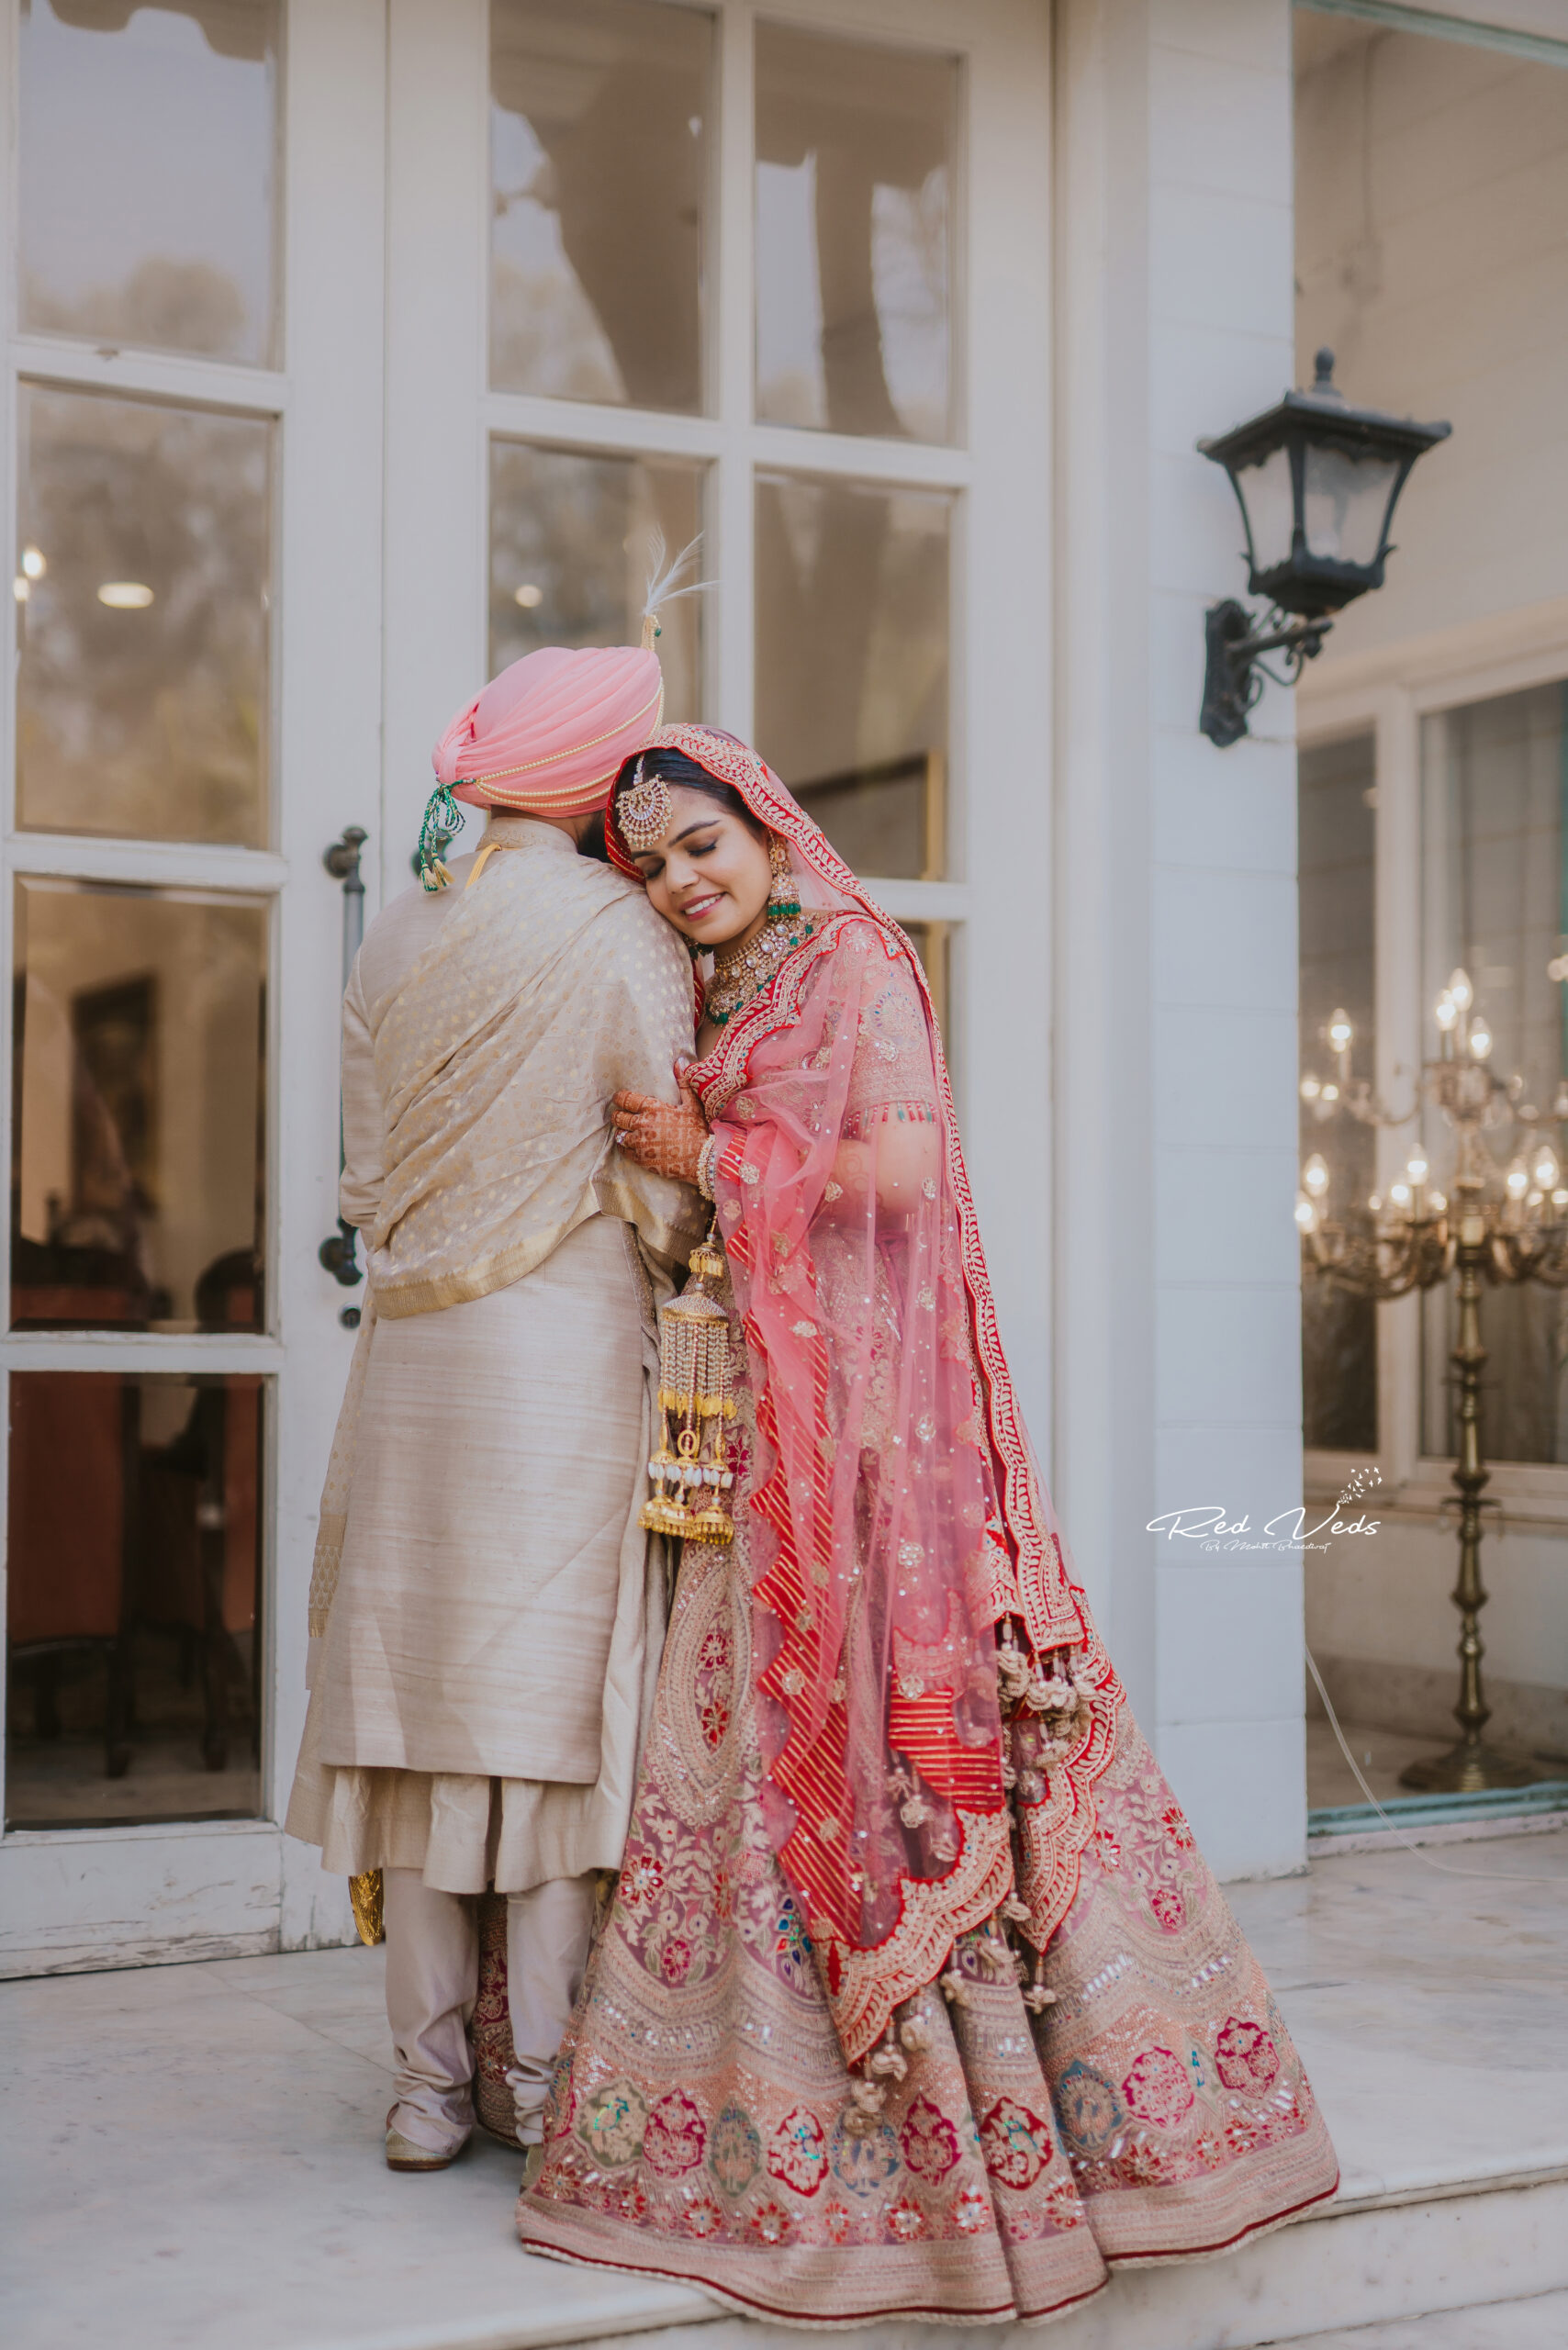 Pakistani bride | Indian wedding photography couples, Bridal photography,  Pakistani bride